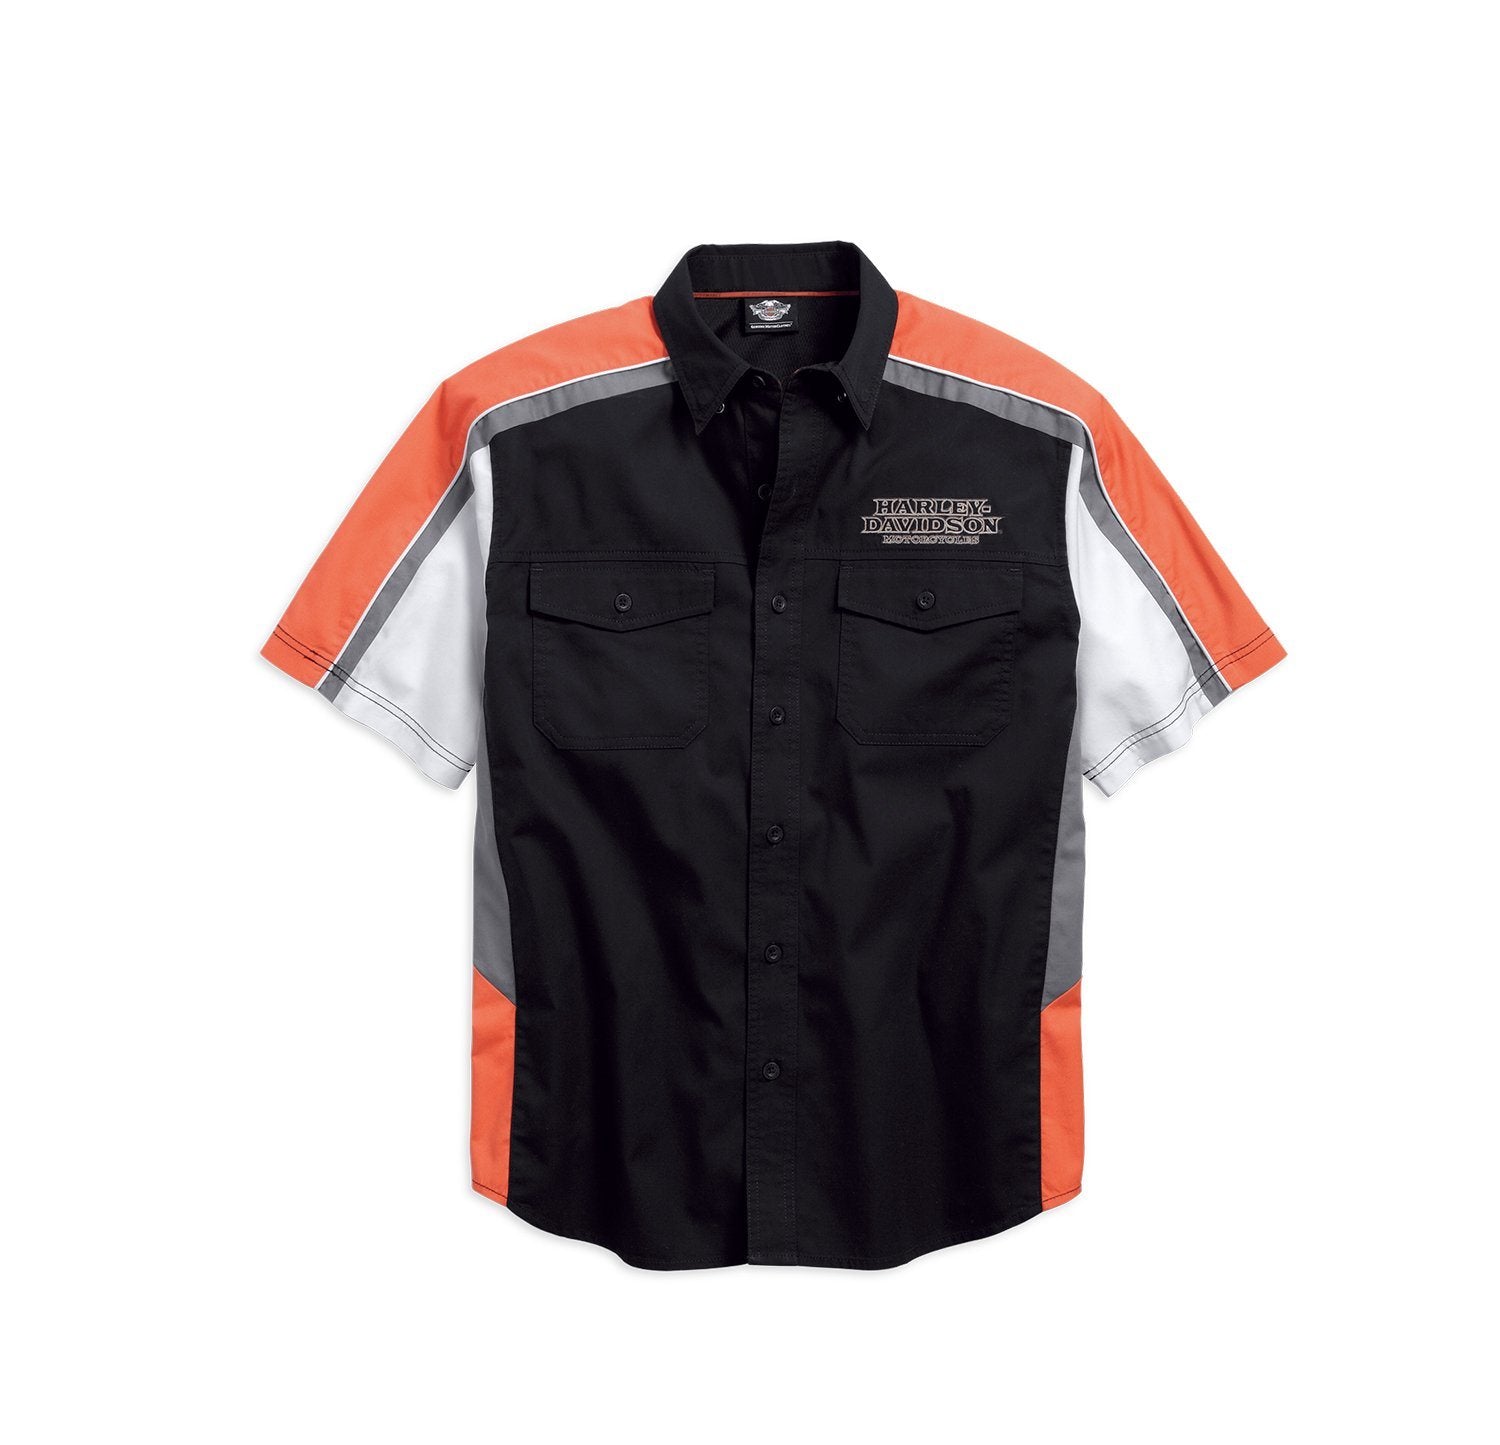 Harley-Davidson Men's Performance Vented Pinstripe Flames Shirt 99046-16VM